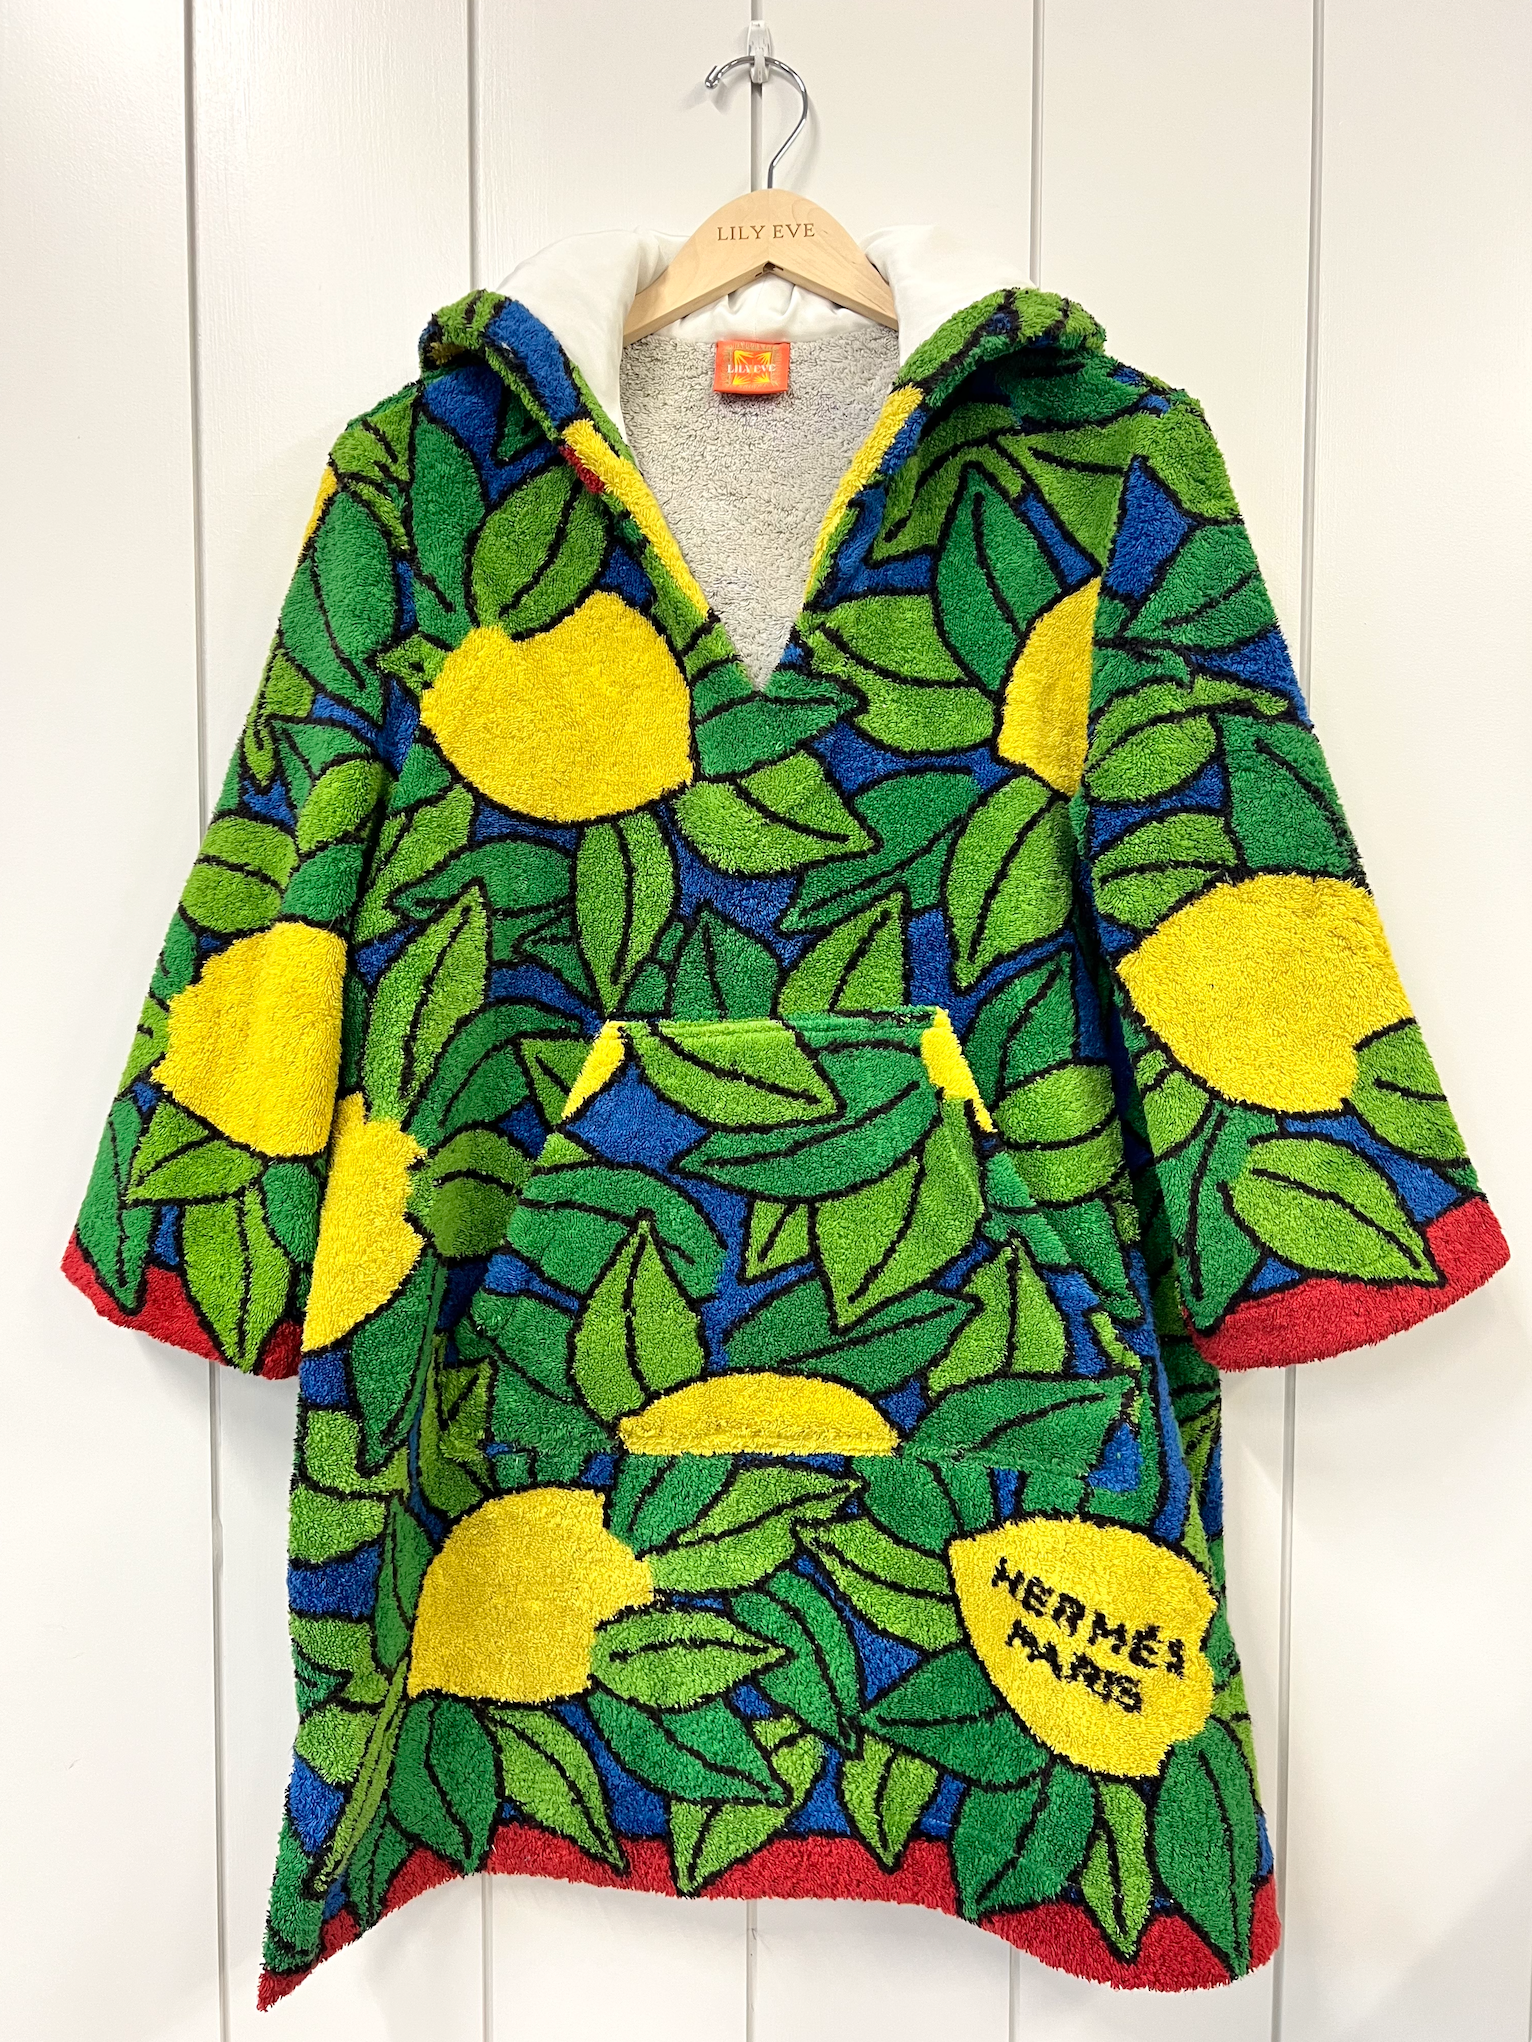 The Lemon Leaf Dress